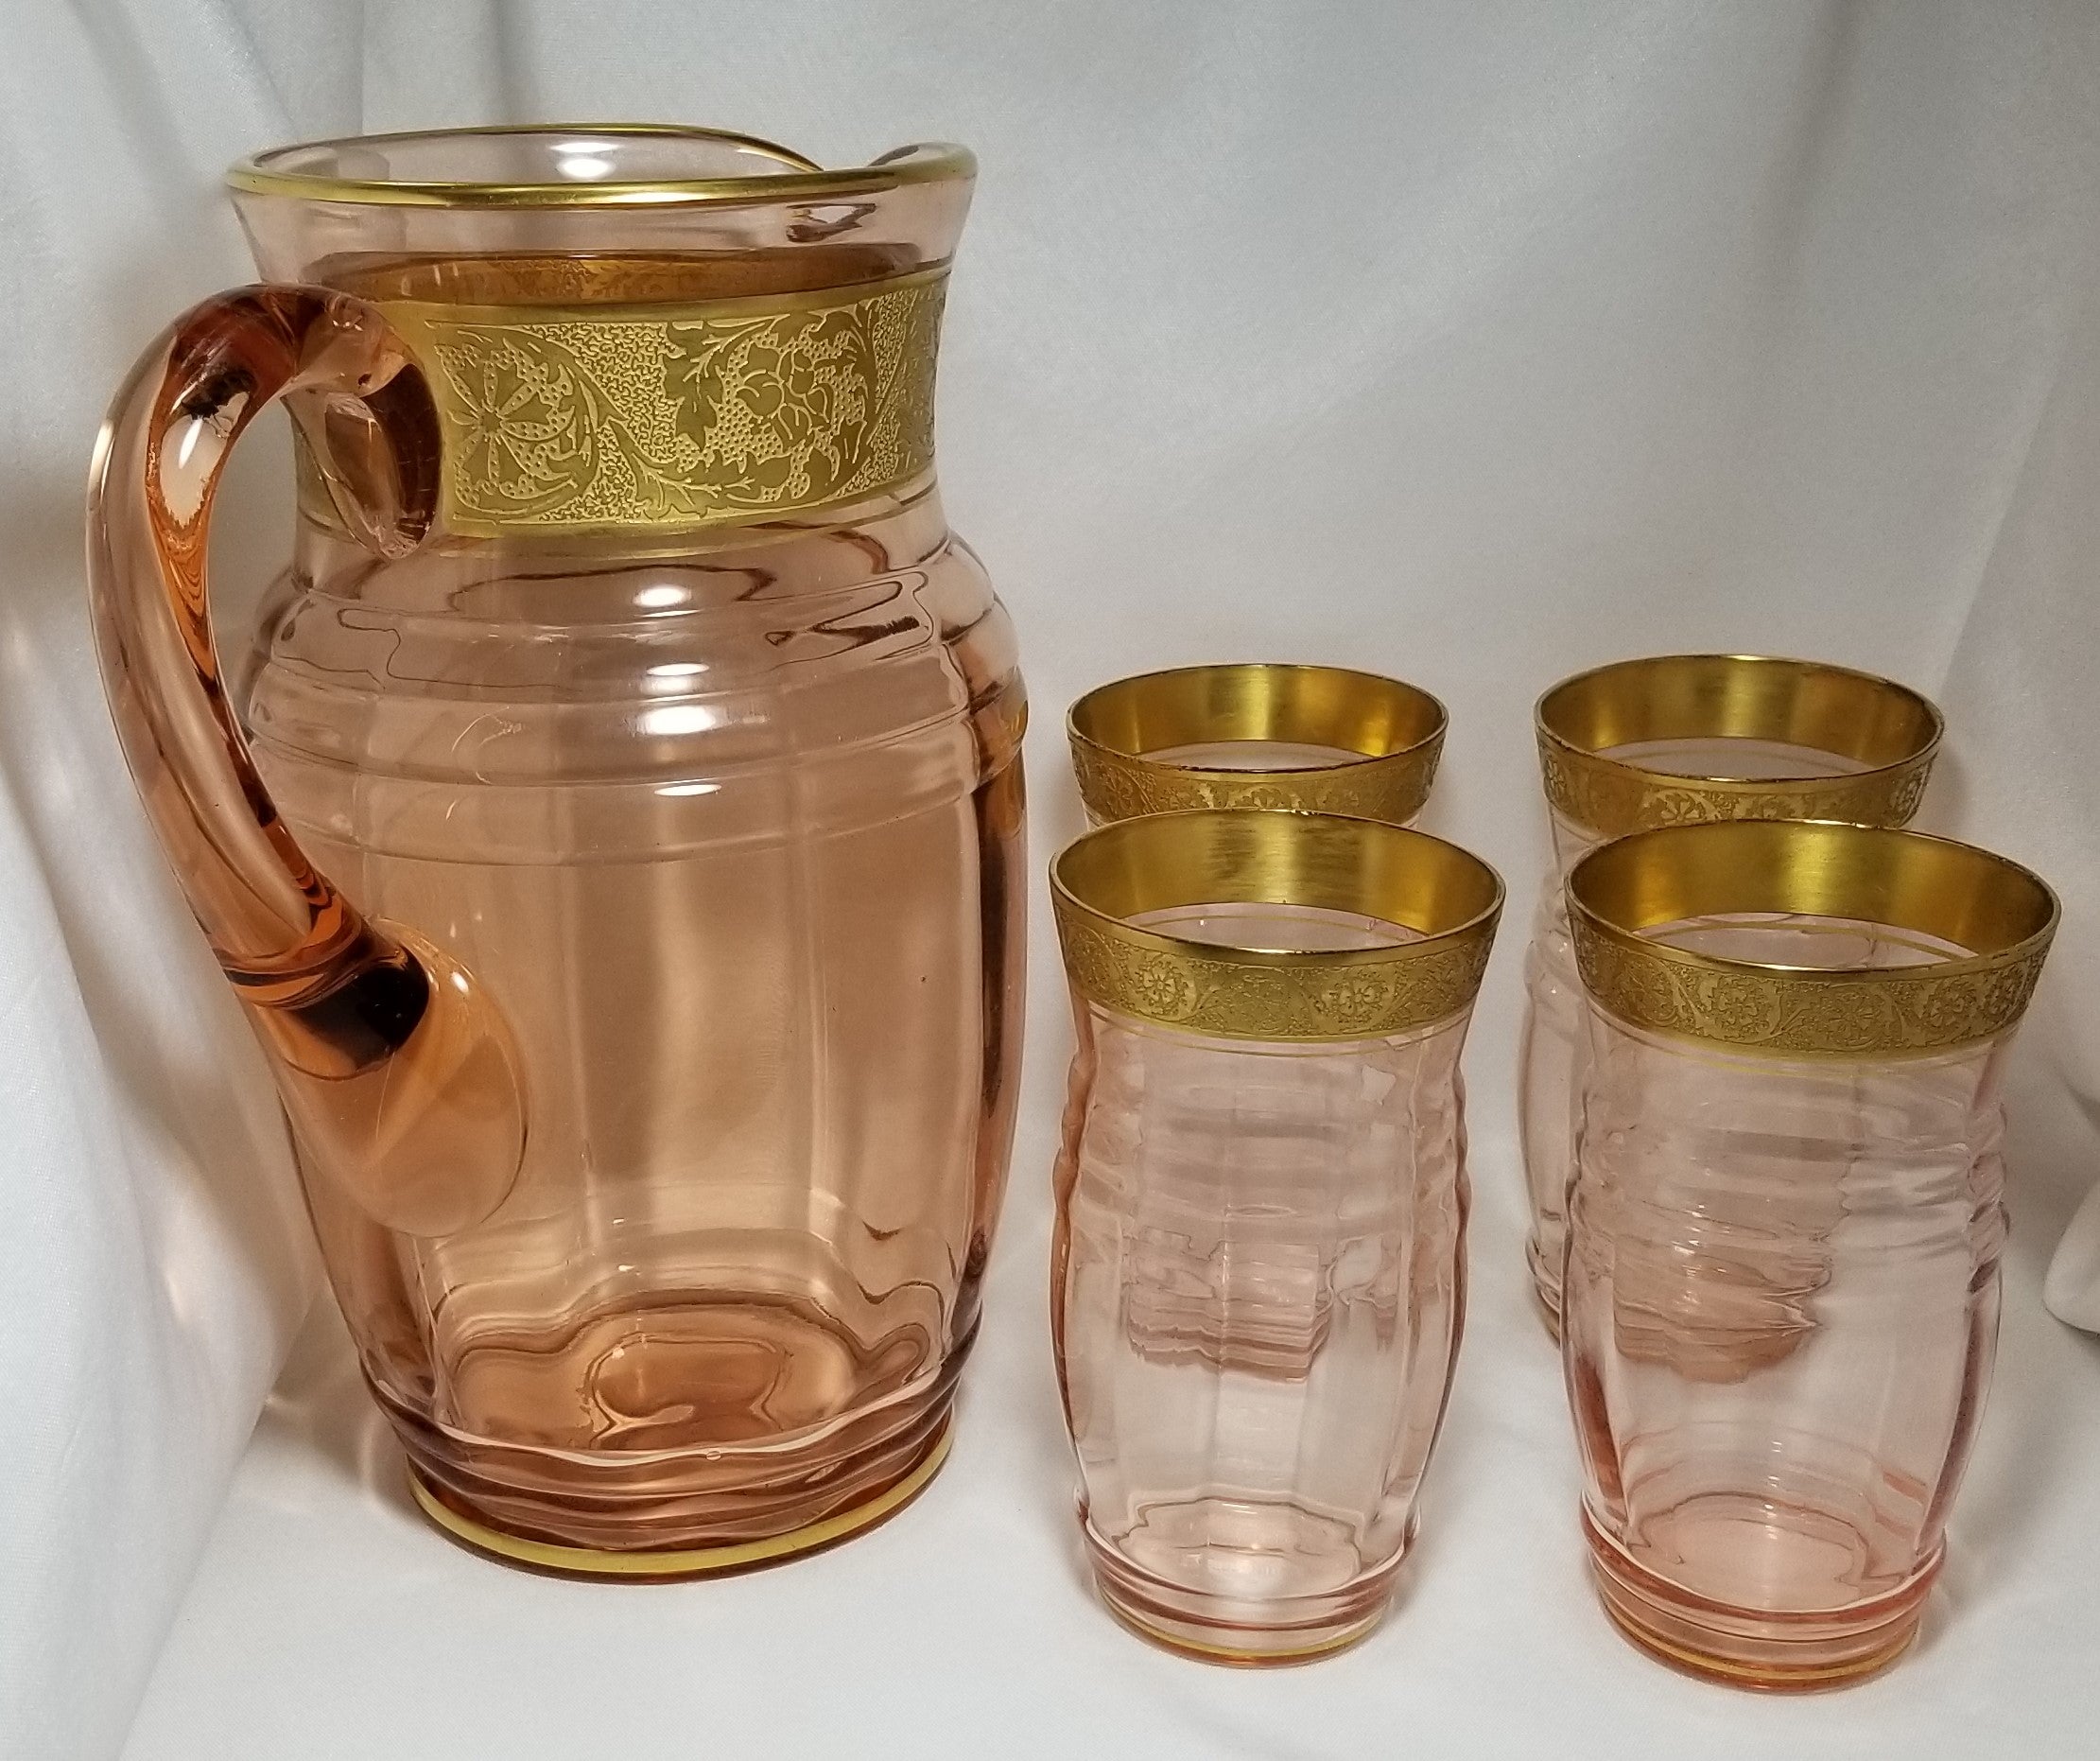 Tiffin Elegant Glass Drink Set Pink Pitcher Tumblers w/ Rare Gold